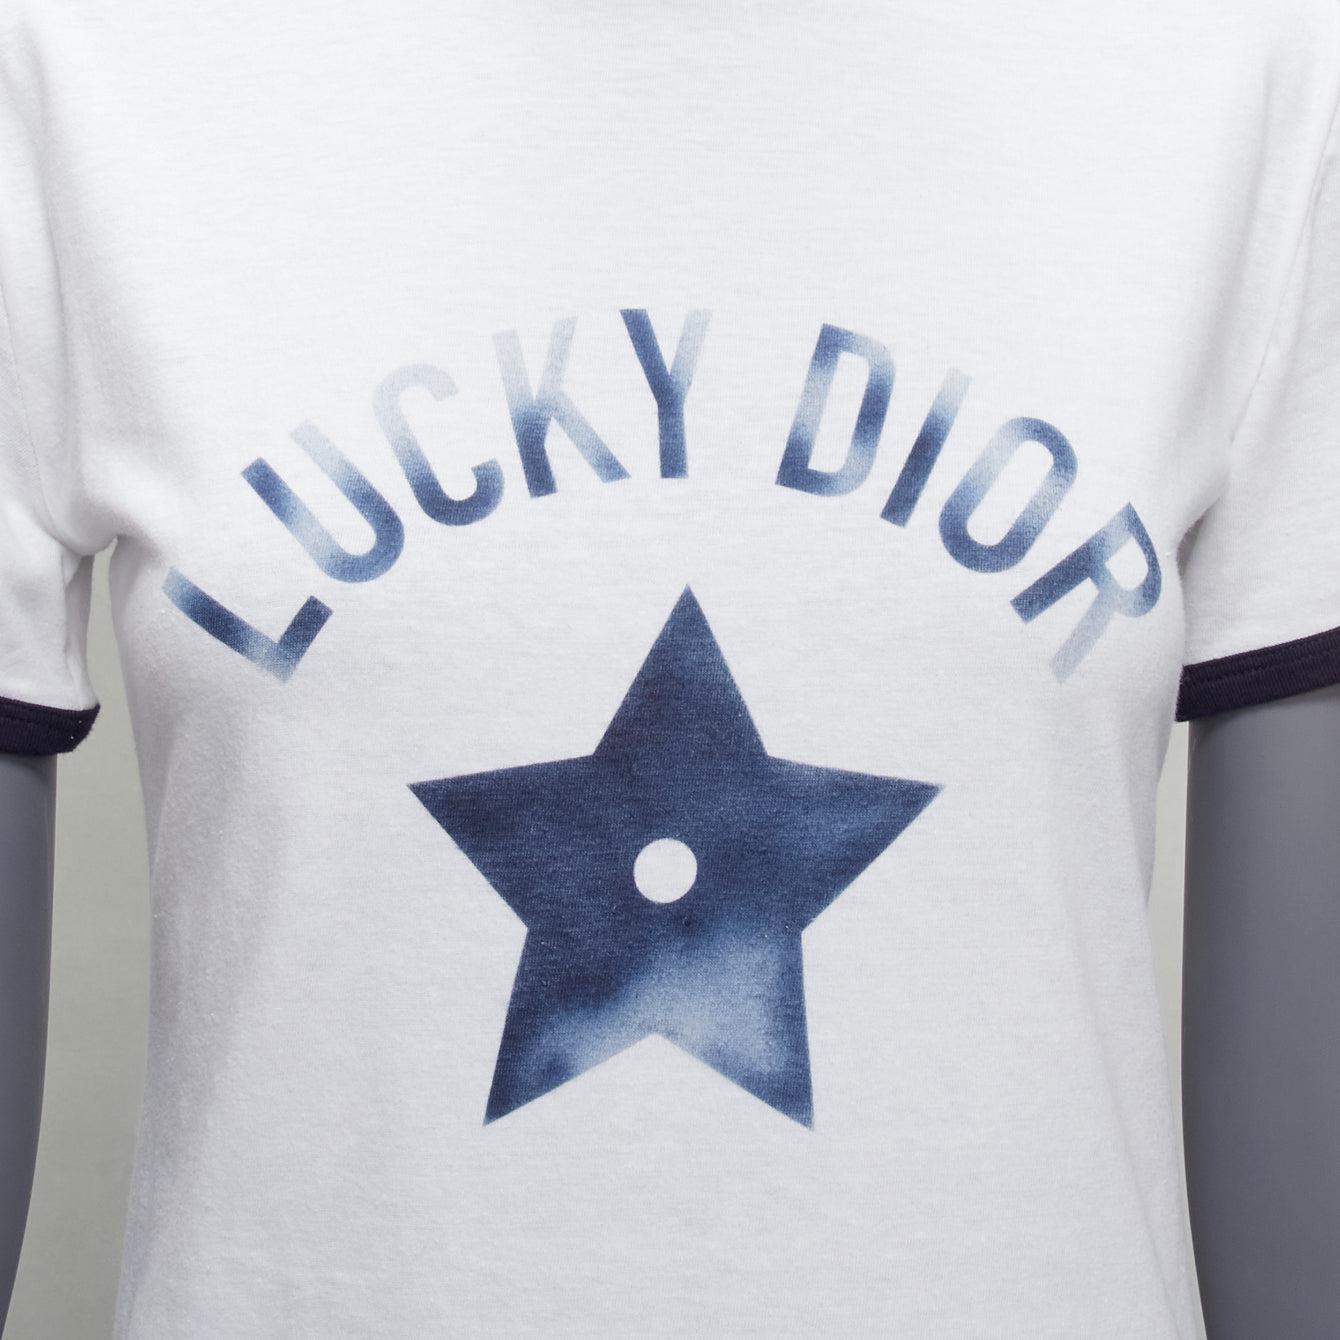 CHRISTIAN DIOR 2022 Lucky weiß blau ombre star logo ringer tshirt XS 1